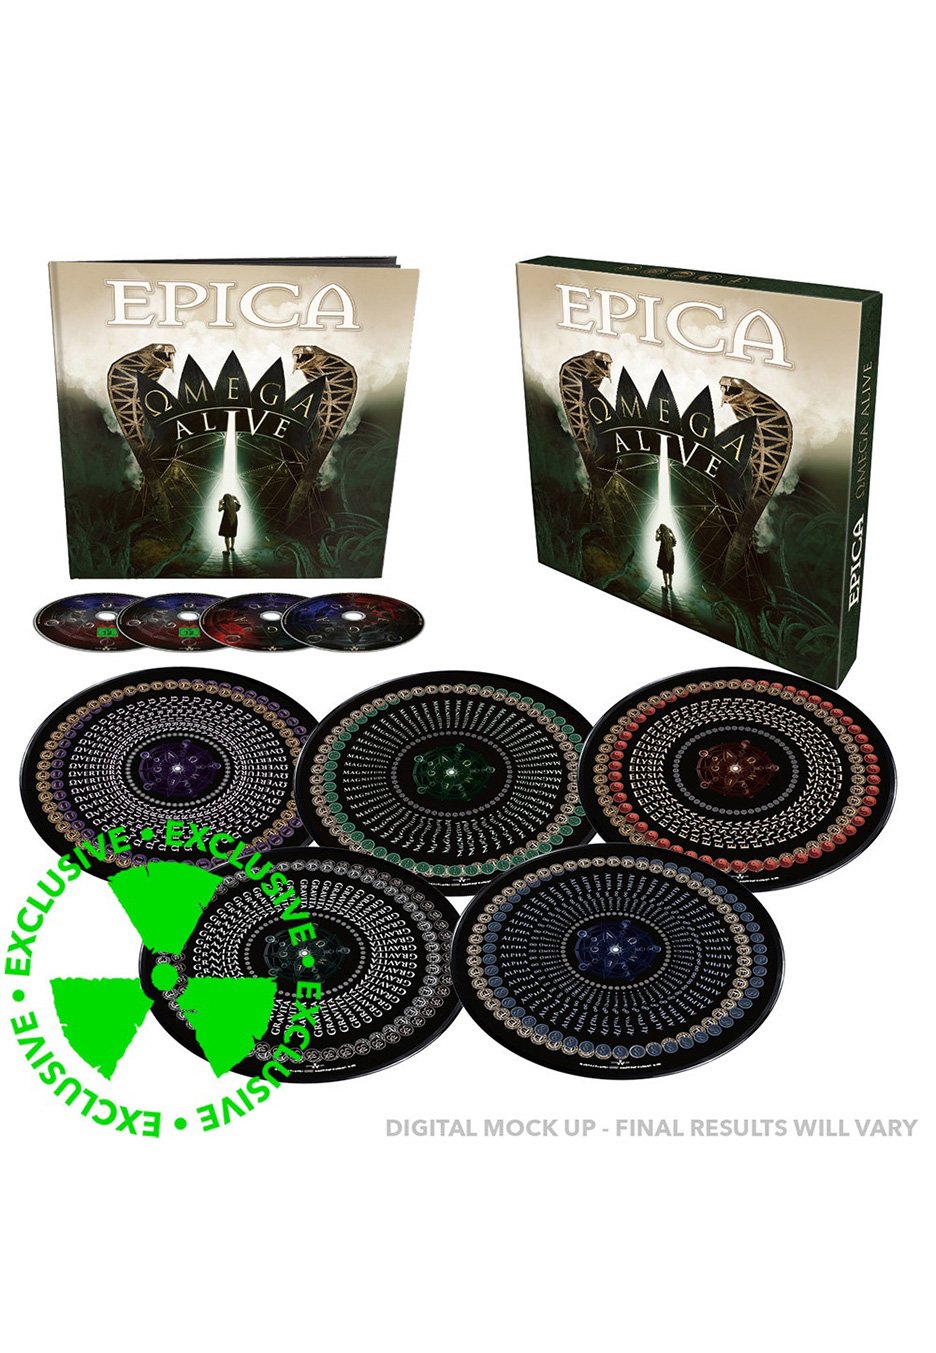 Epica - Omega Alive Ltd. - Picture Vinyl Boxset